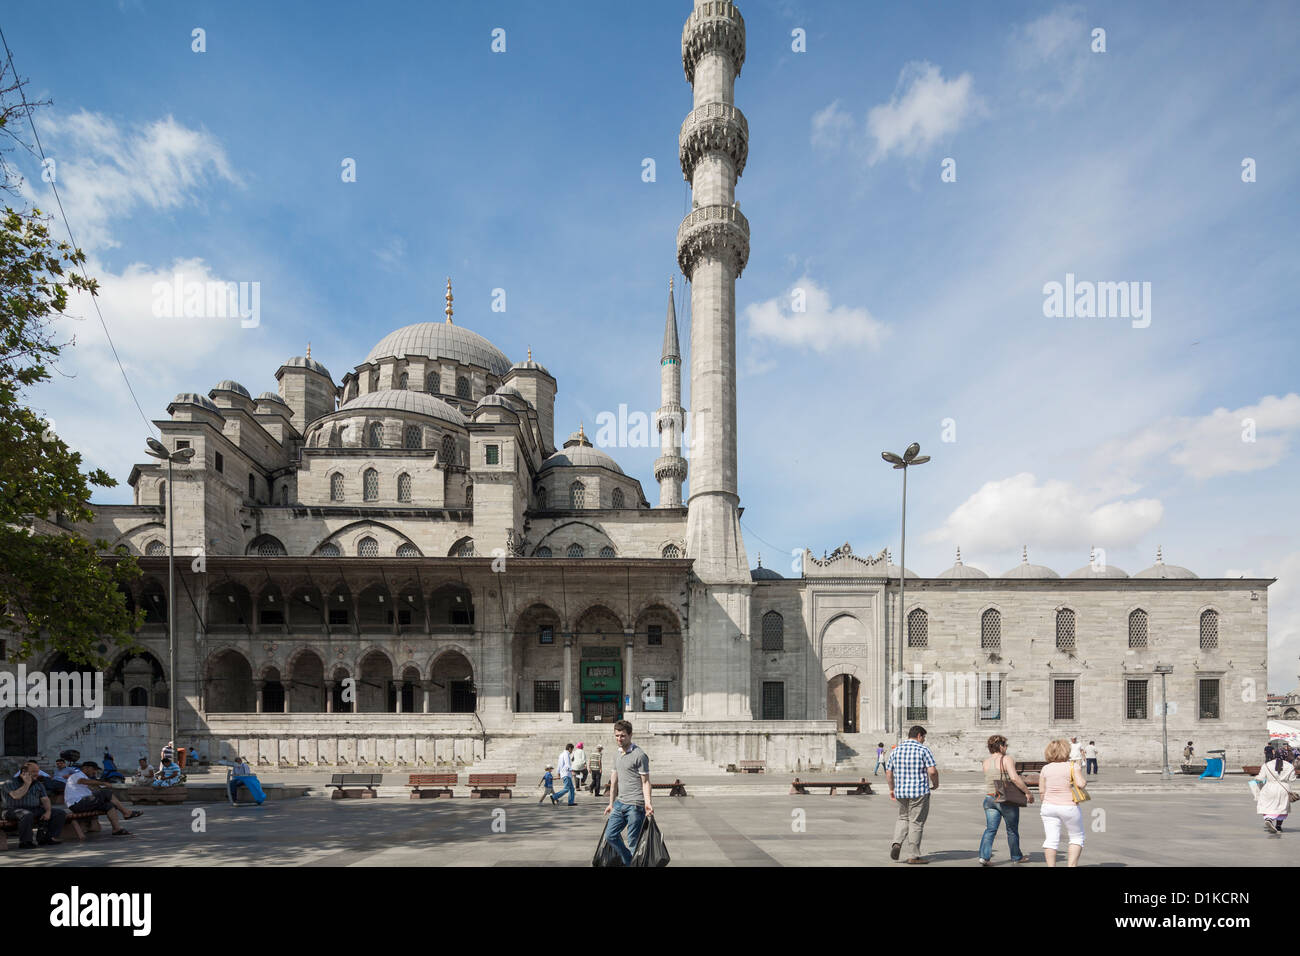 La Yeni Cami o nueva Mezquita, distrito de Eminönü de Estambul, Turquía. Foto de stock